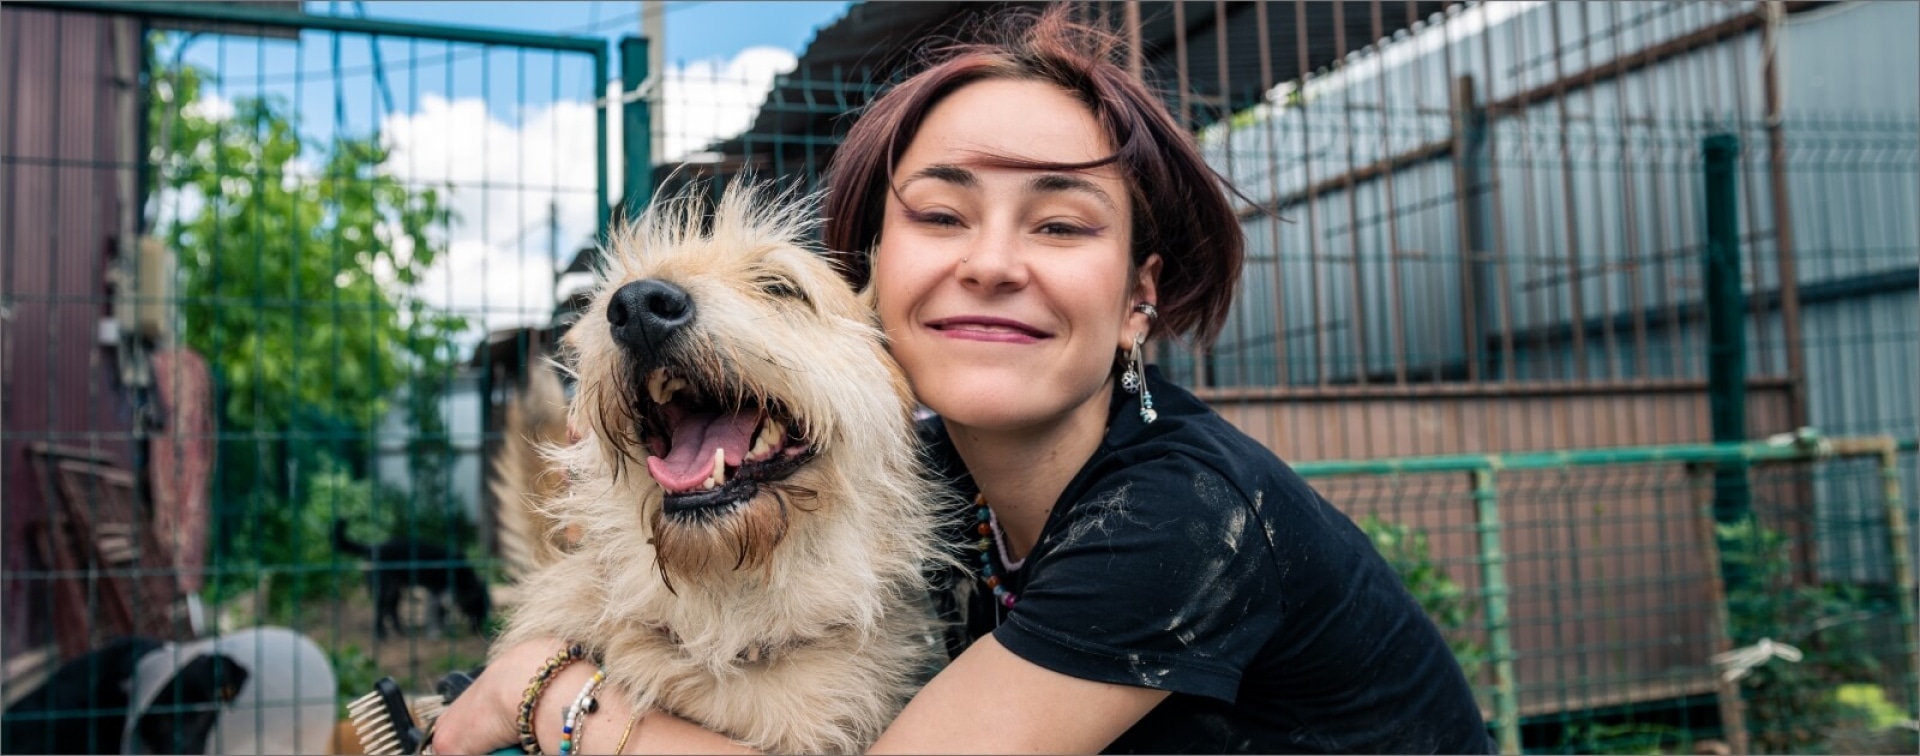 woman and dog smiling at the camera